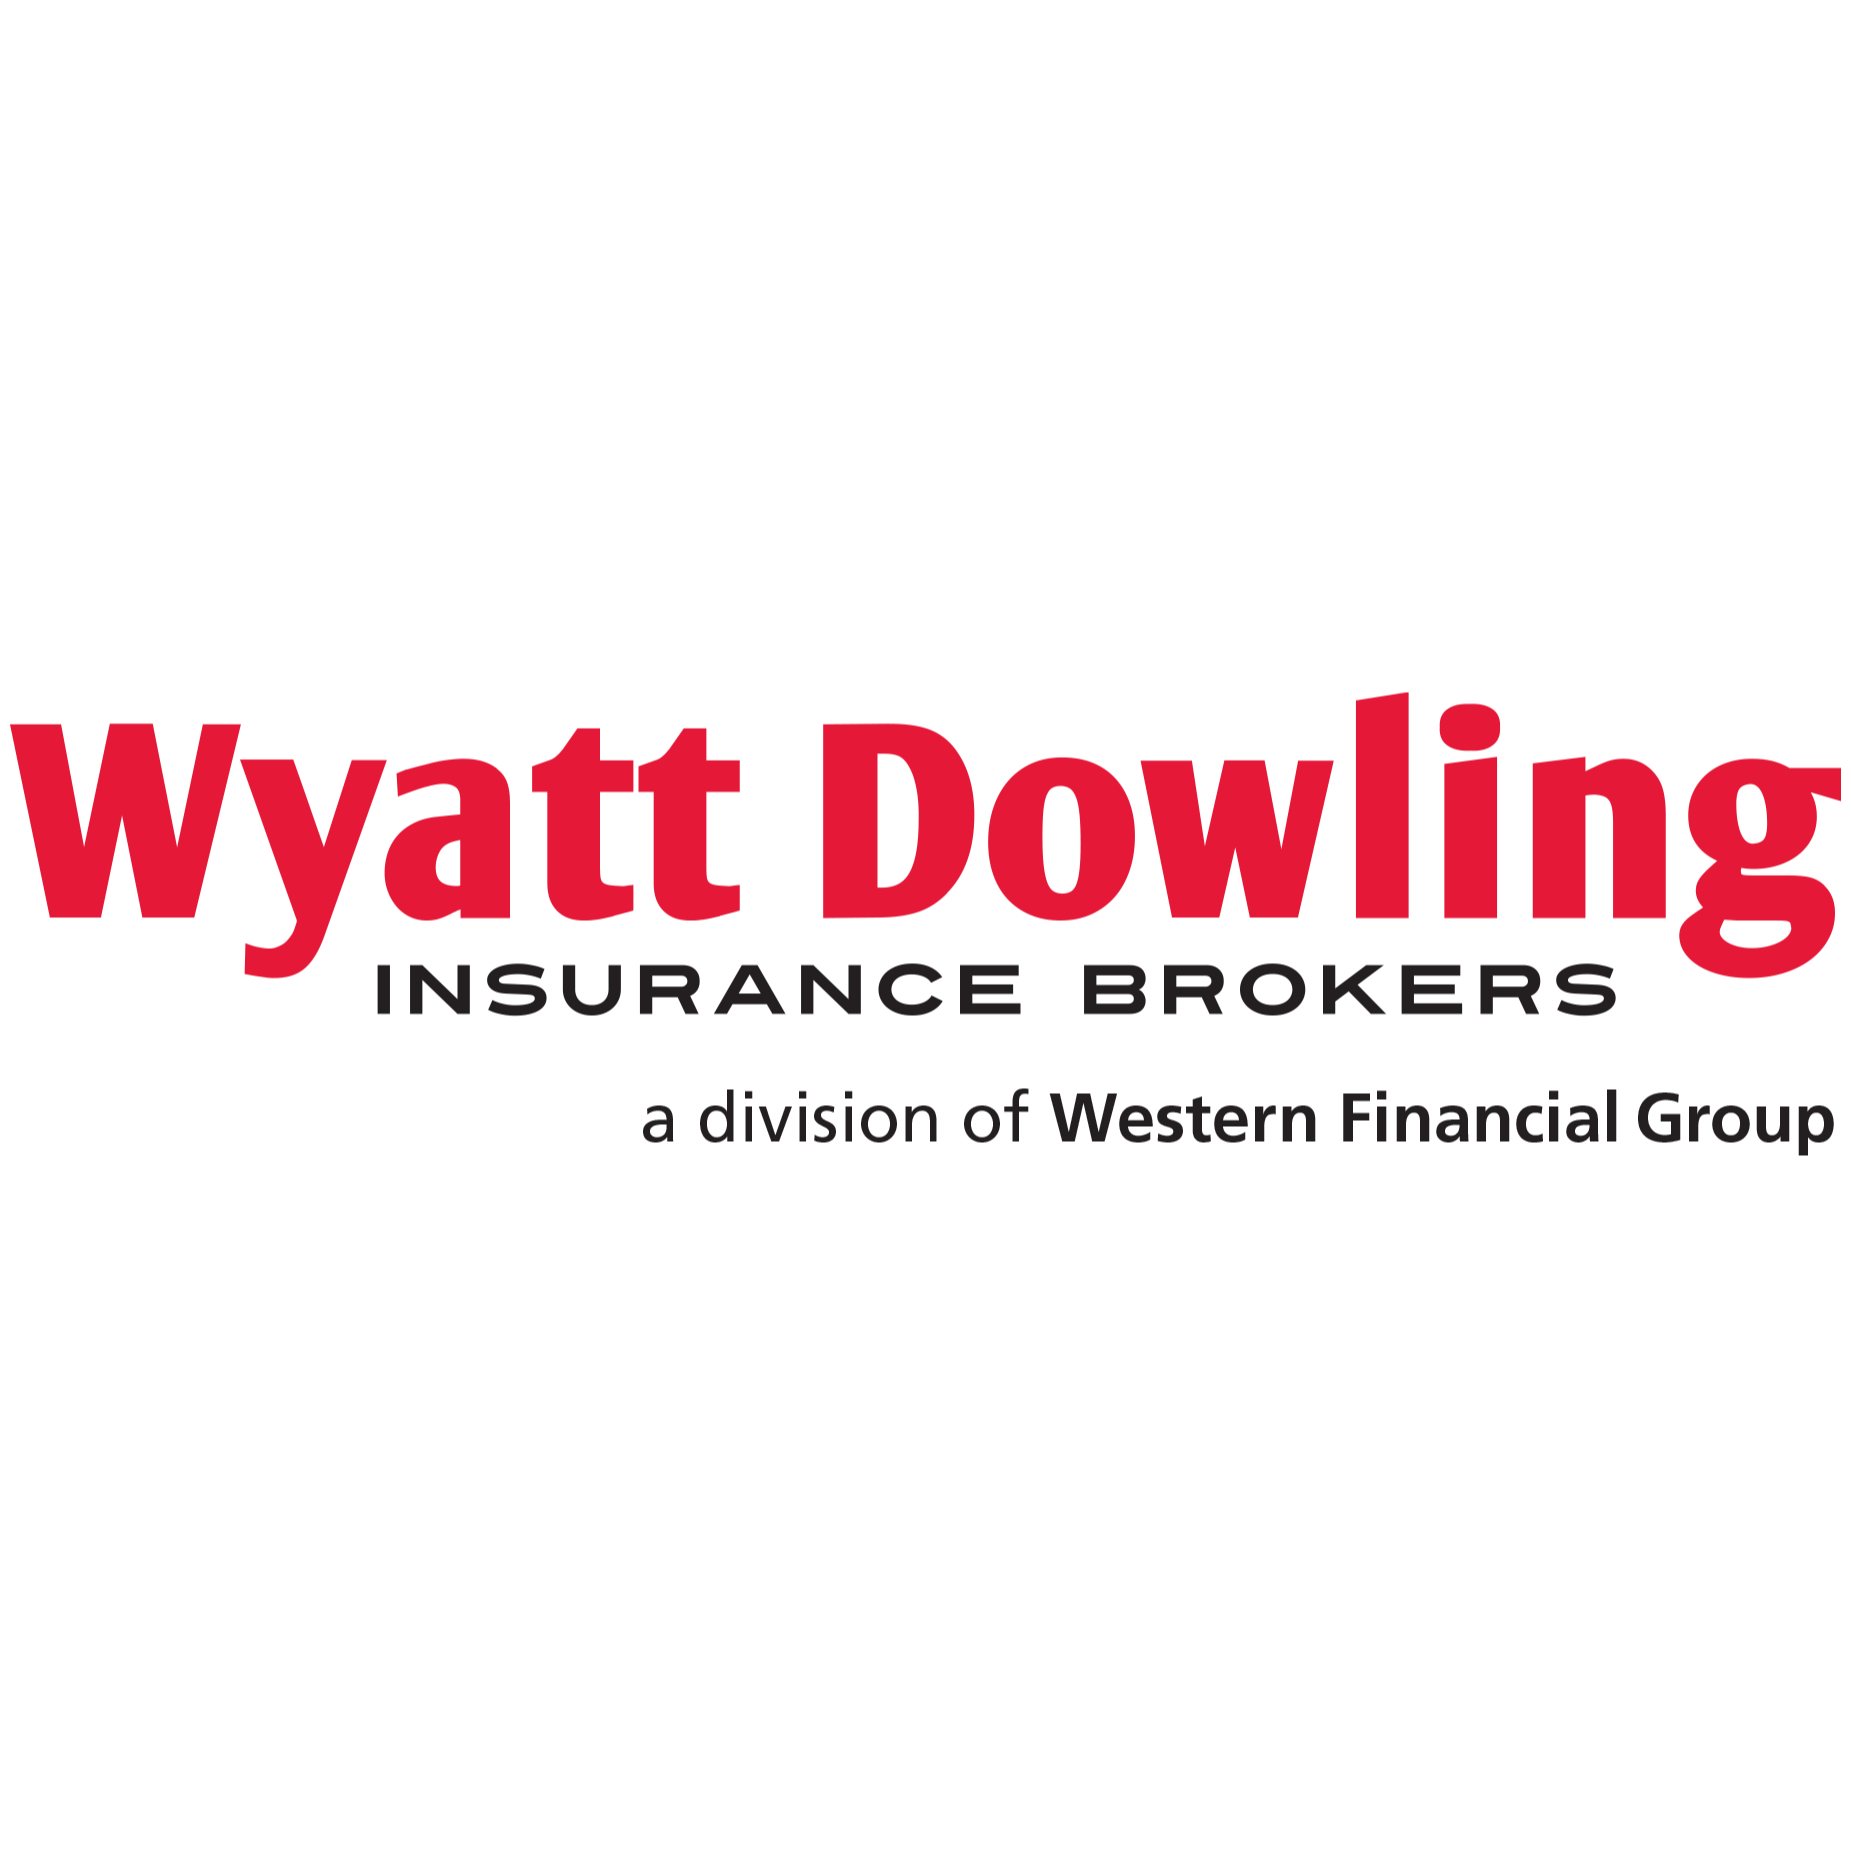 Wyatt Dowling Insurance Brokers - Insurance